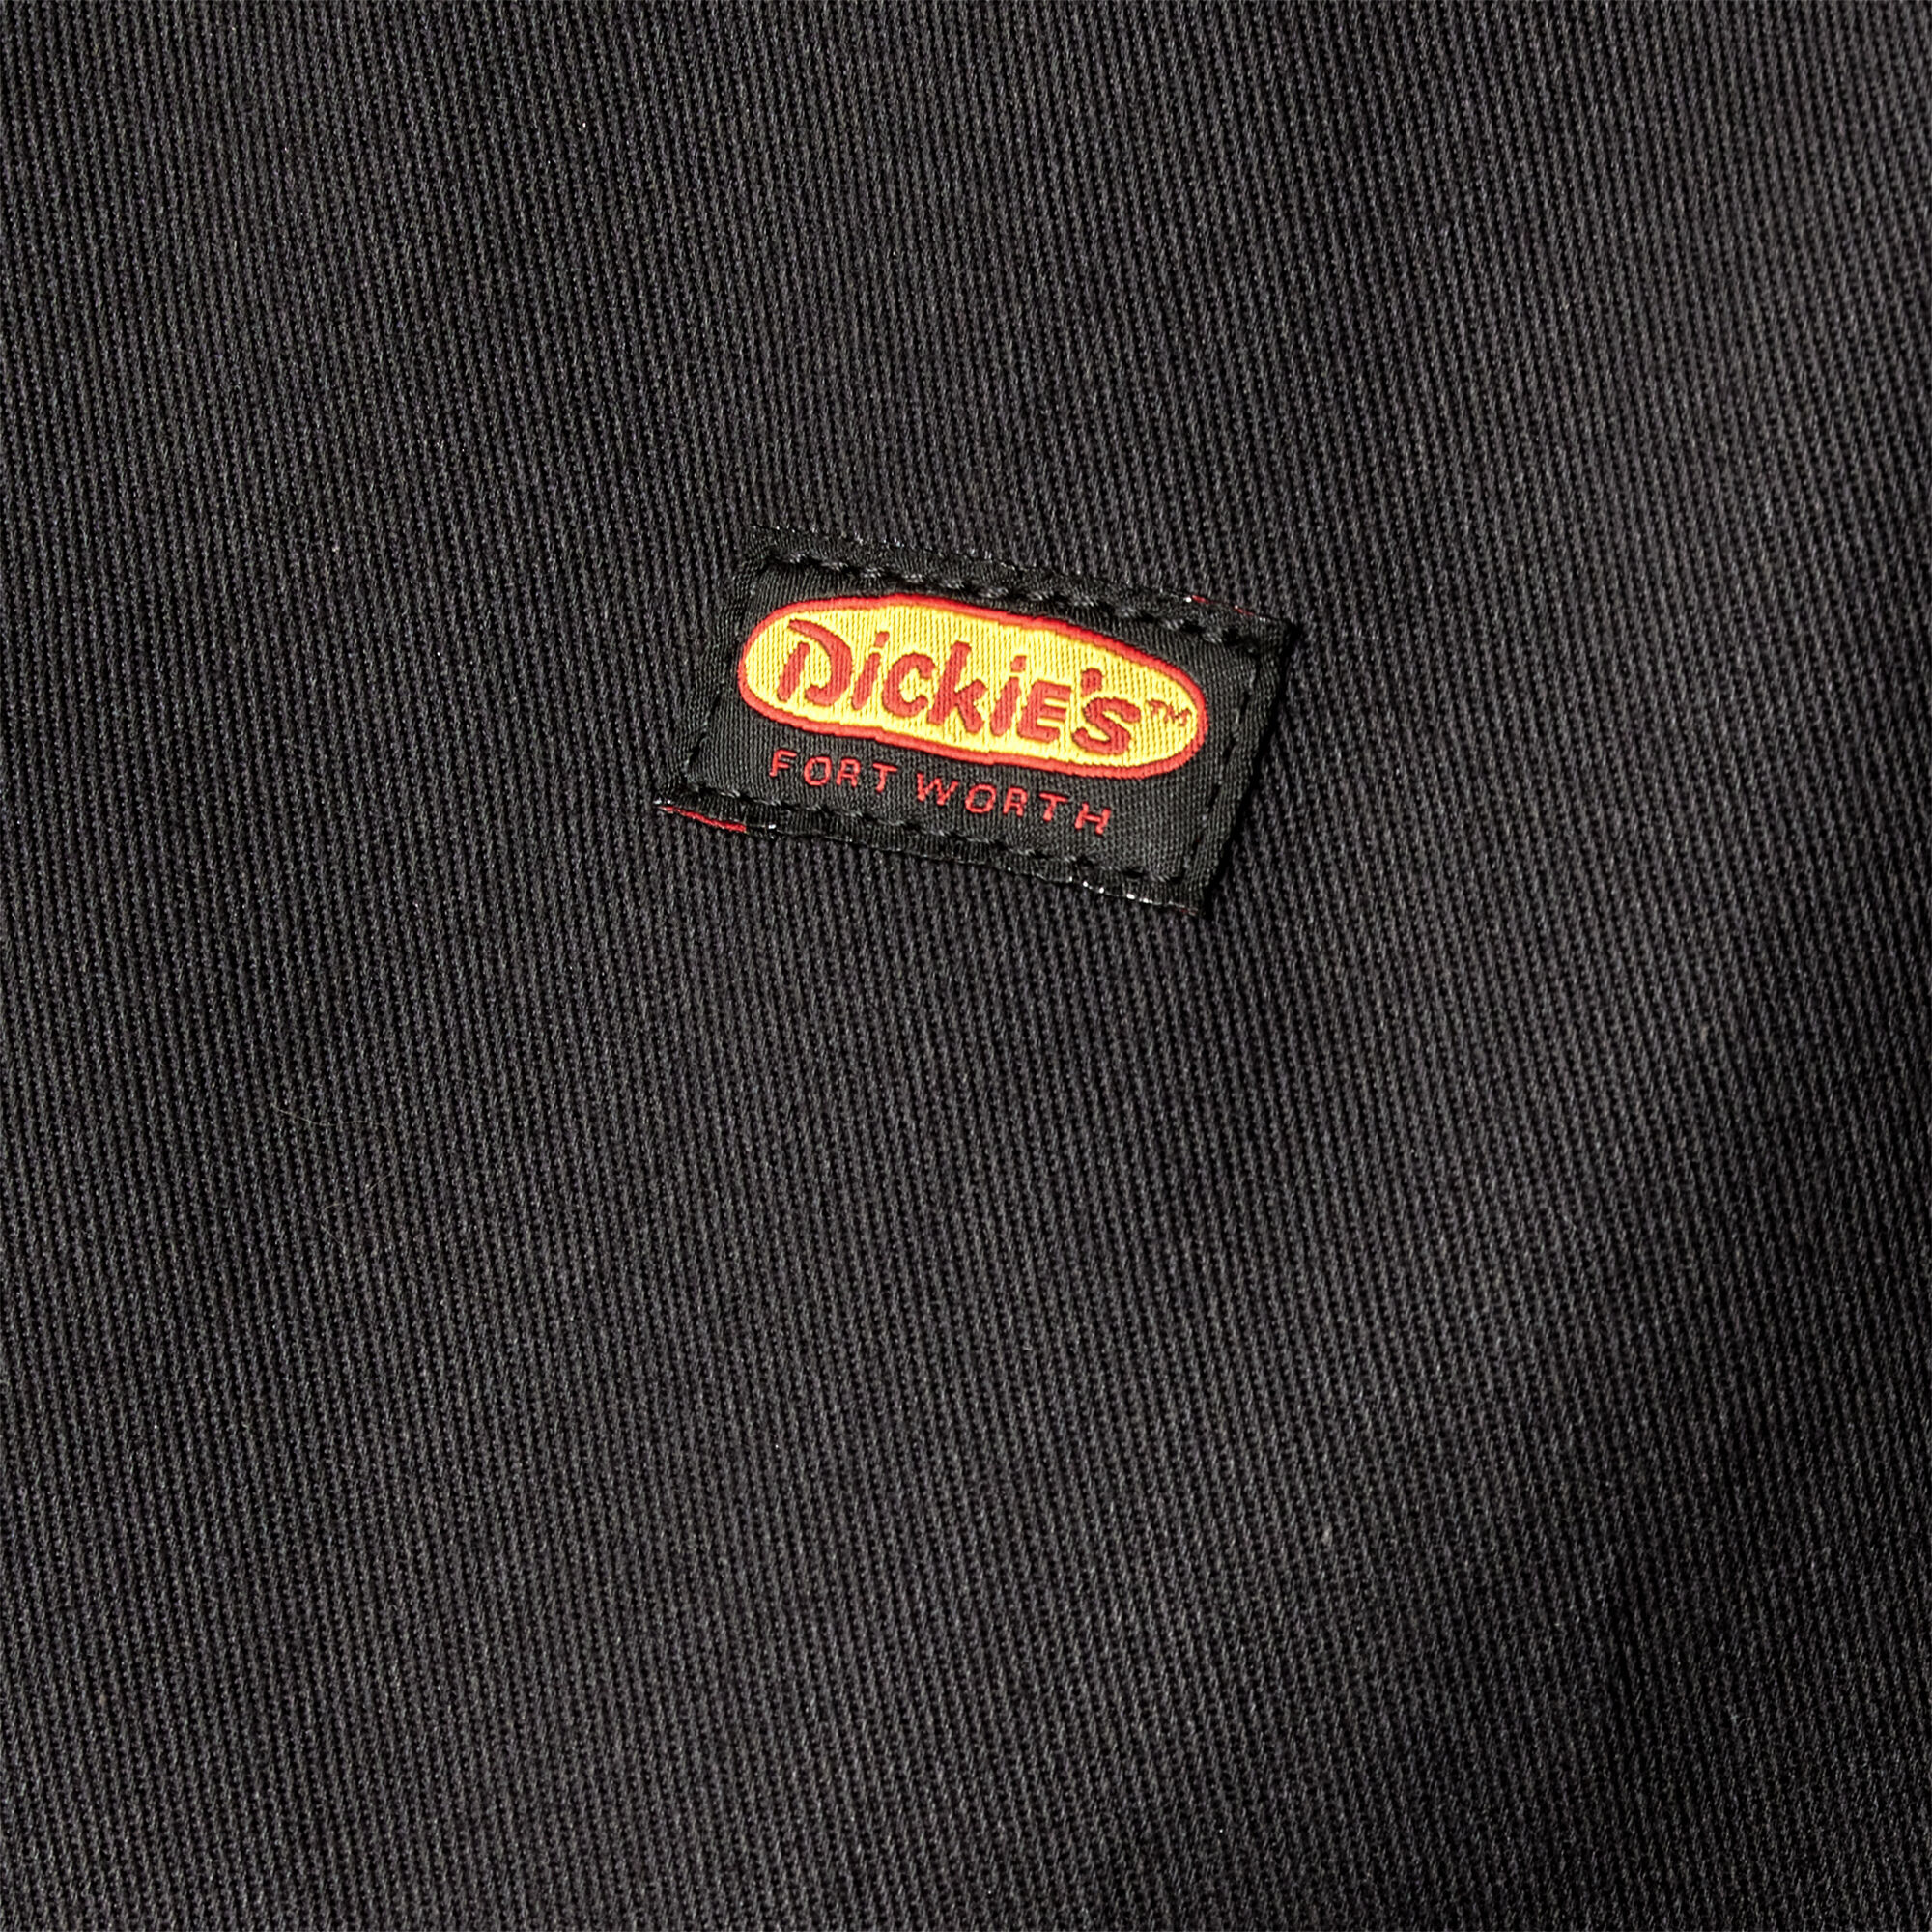 Dickies X Willy Chavarria Jacket - Dickies US